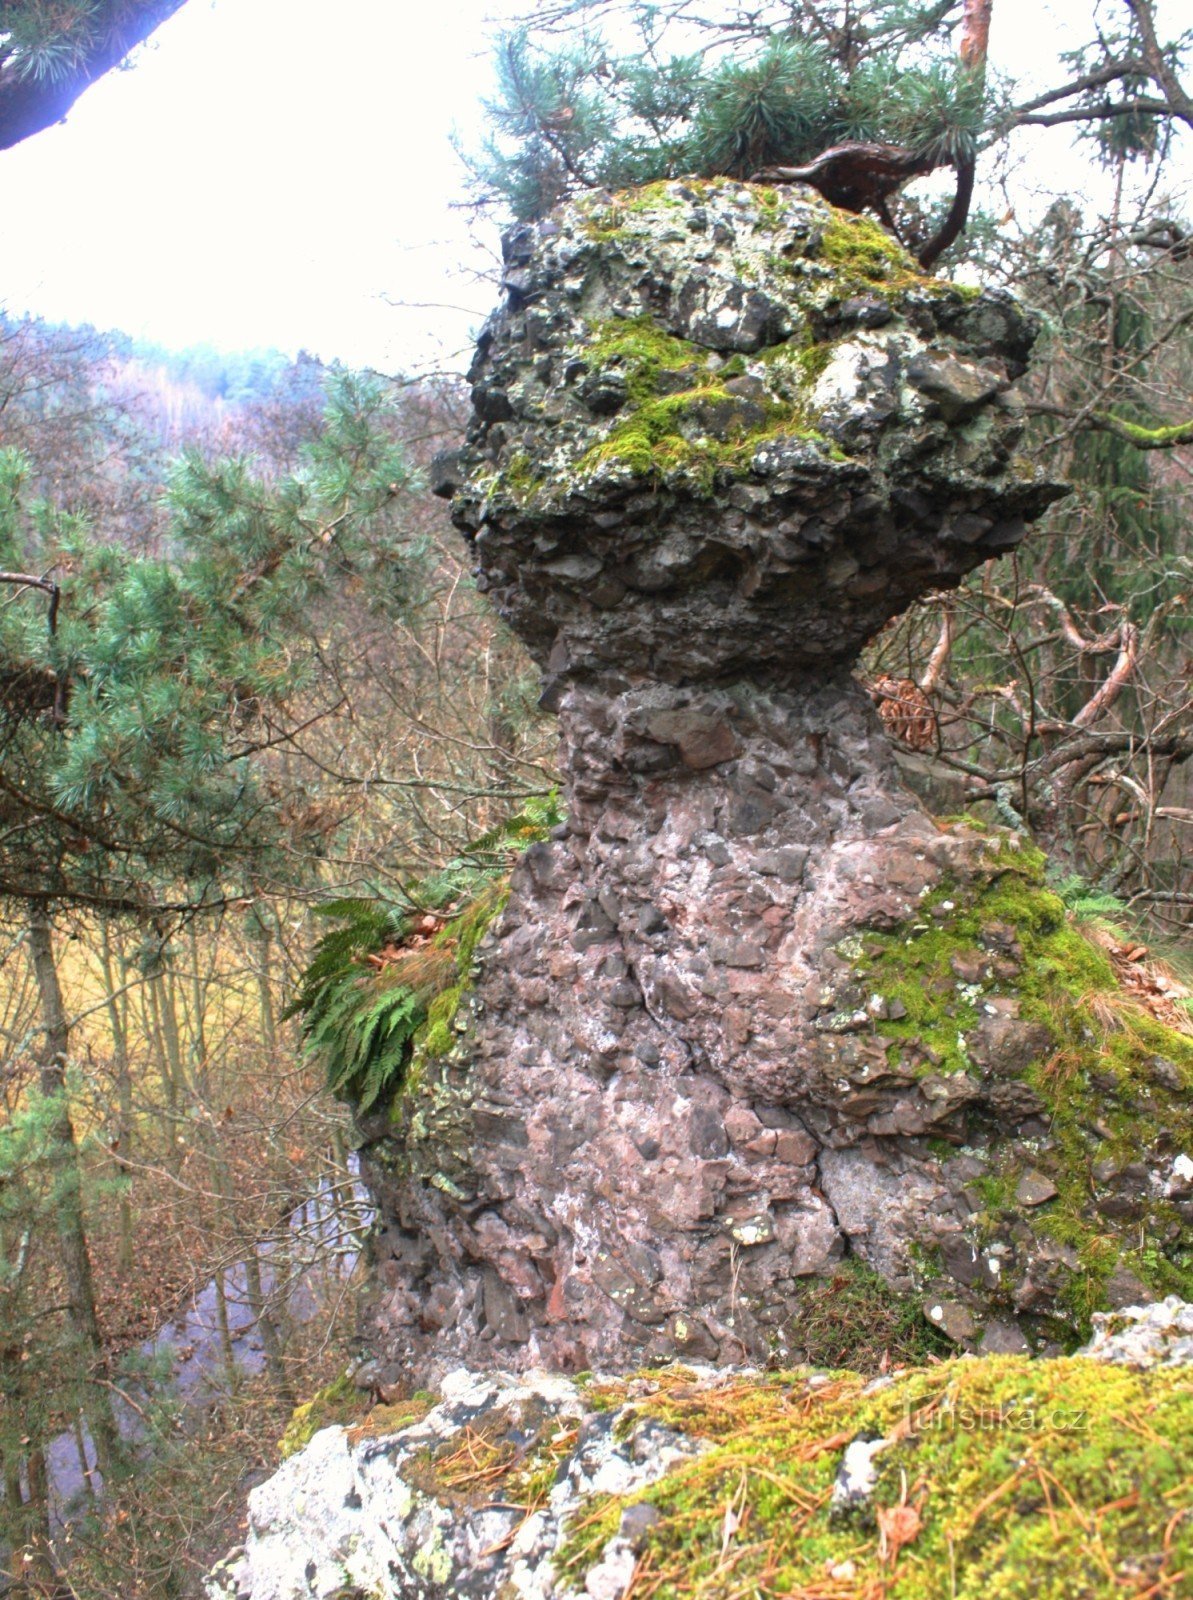 Krkatá baba rock formation - symbol of the locality